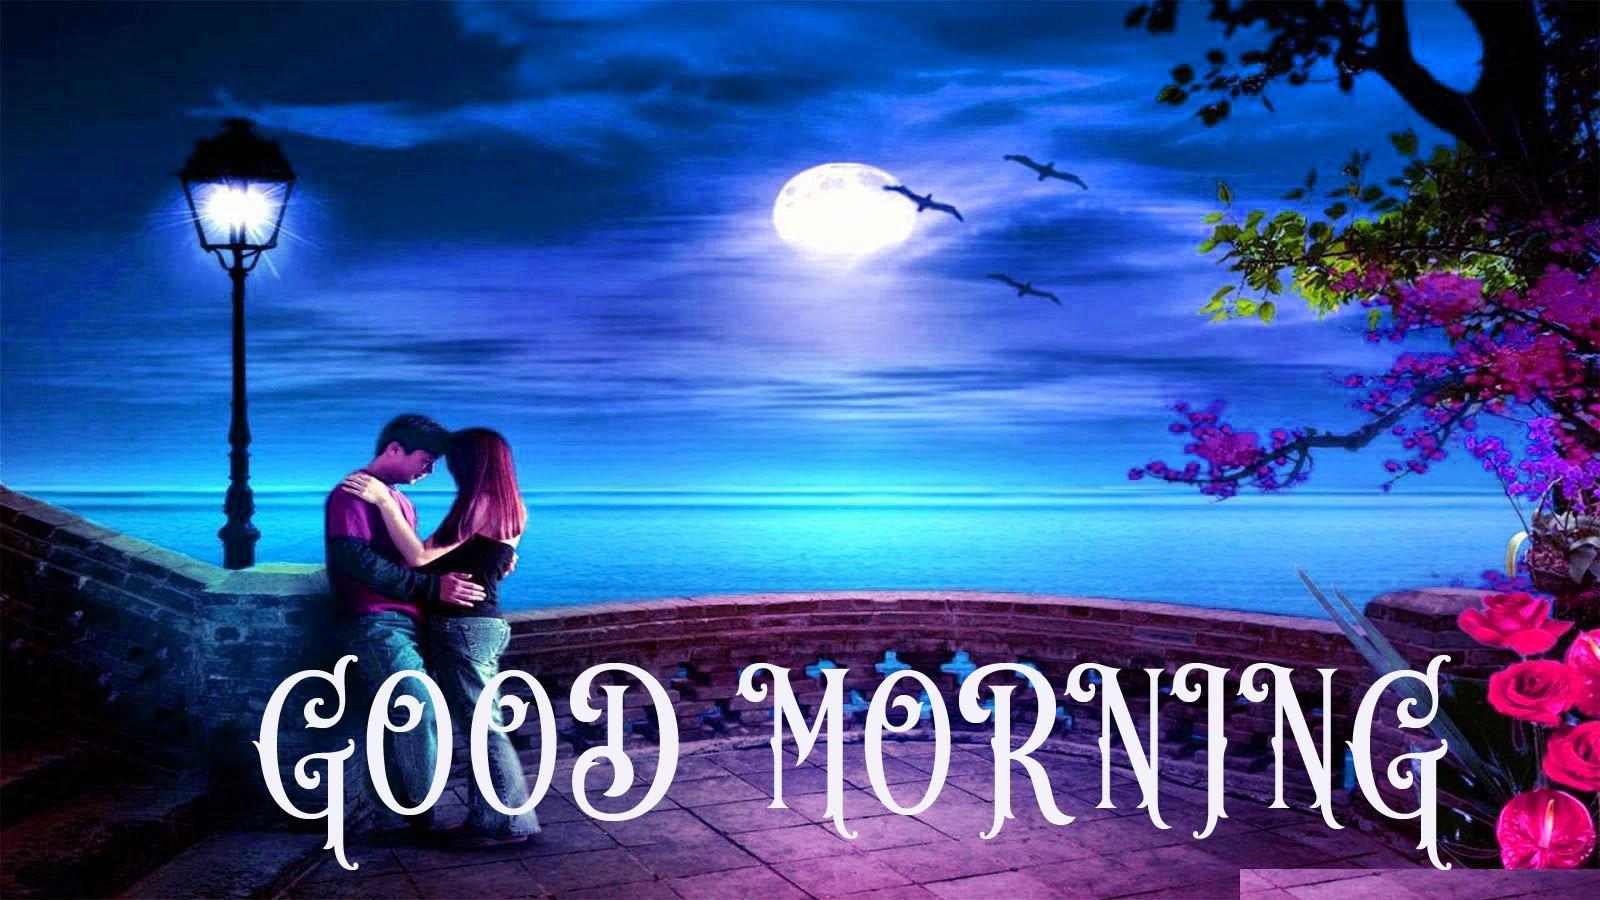 Romantic Good Morning Image Wallpaper Pic My Beautiful